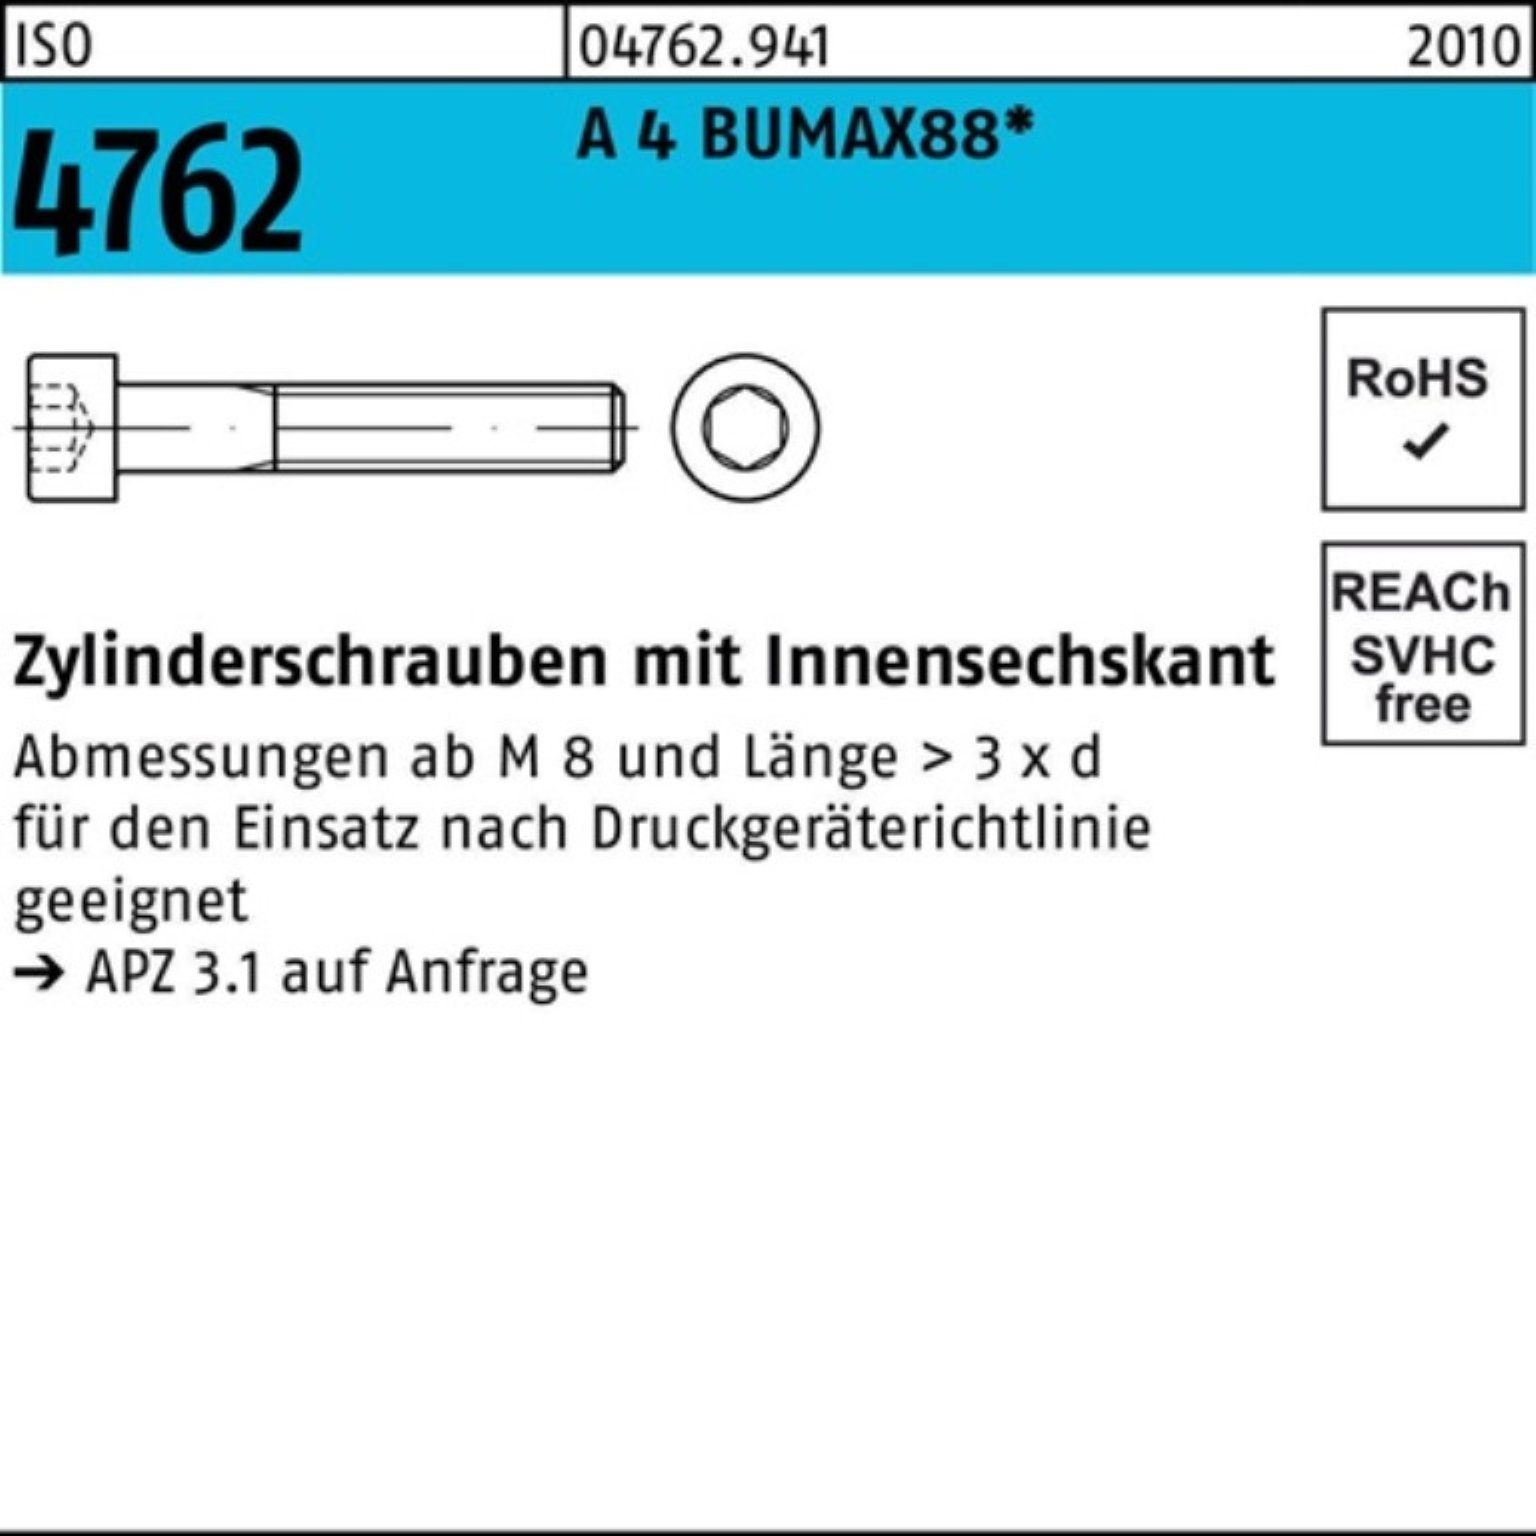 50 Bufab BUMAX88 Zylinderschraube S 4 ISO Innen-6kt Zylinderschraube A Pack 100er M8x 35 4762